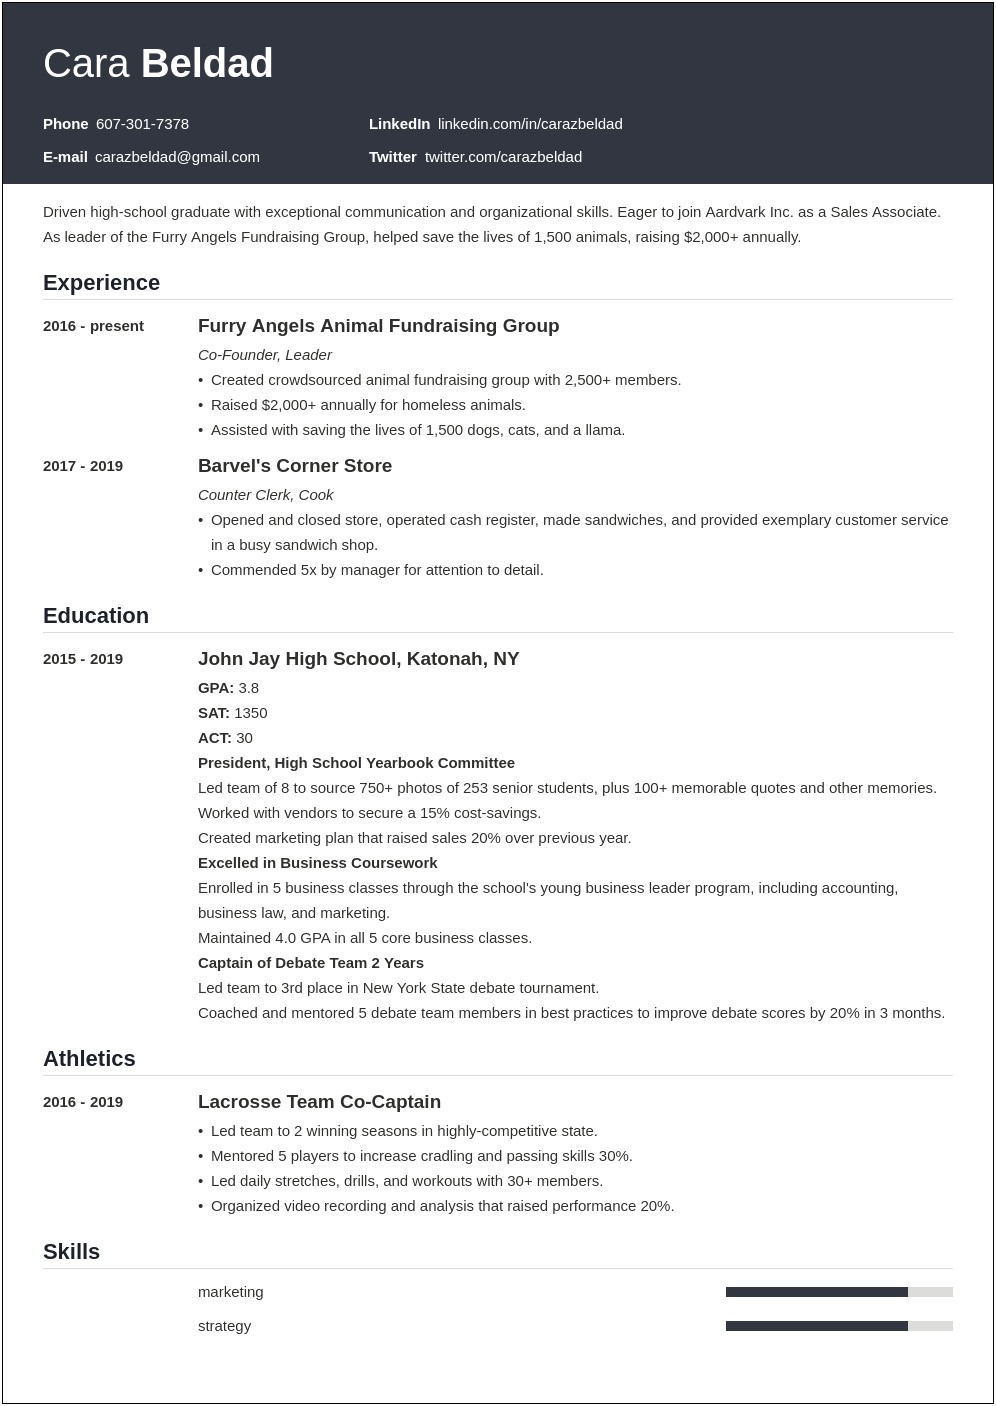 Resume Summary For High School Graduate